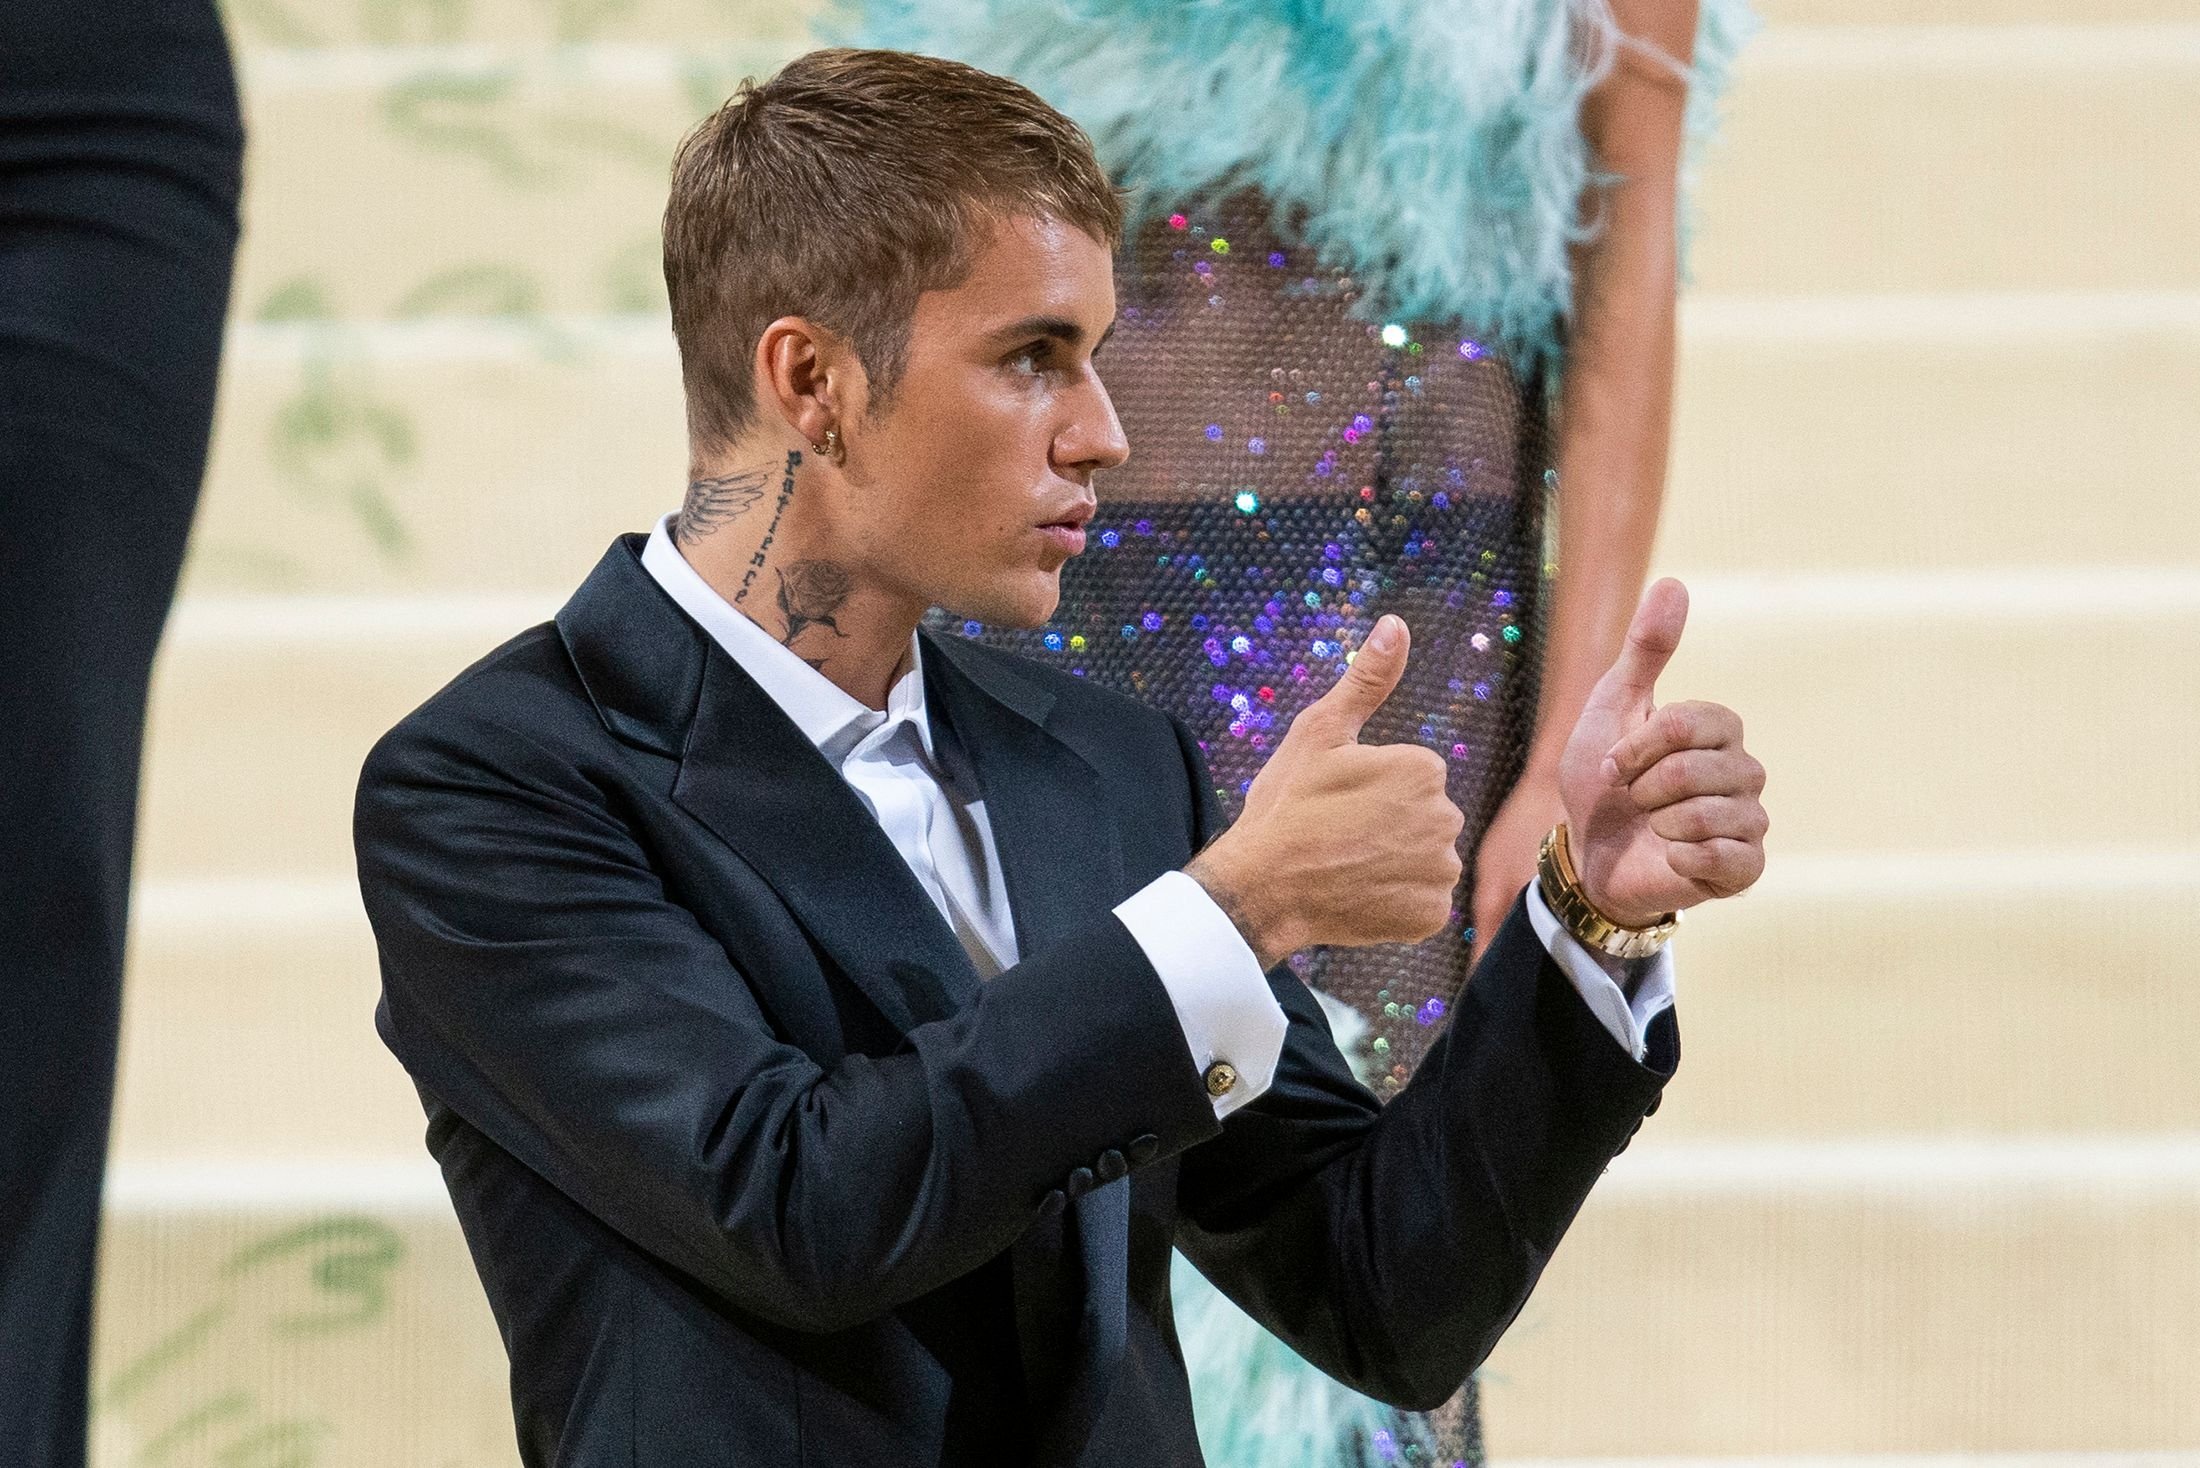 Canadian singer Justin Bieber arrives for the 2021 Met Gala at the Metropolitan Museum of Art, in New York, U.S., Sept. 13, 2021. (AFP Photo)